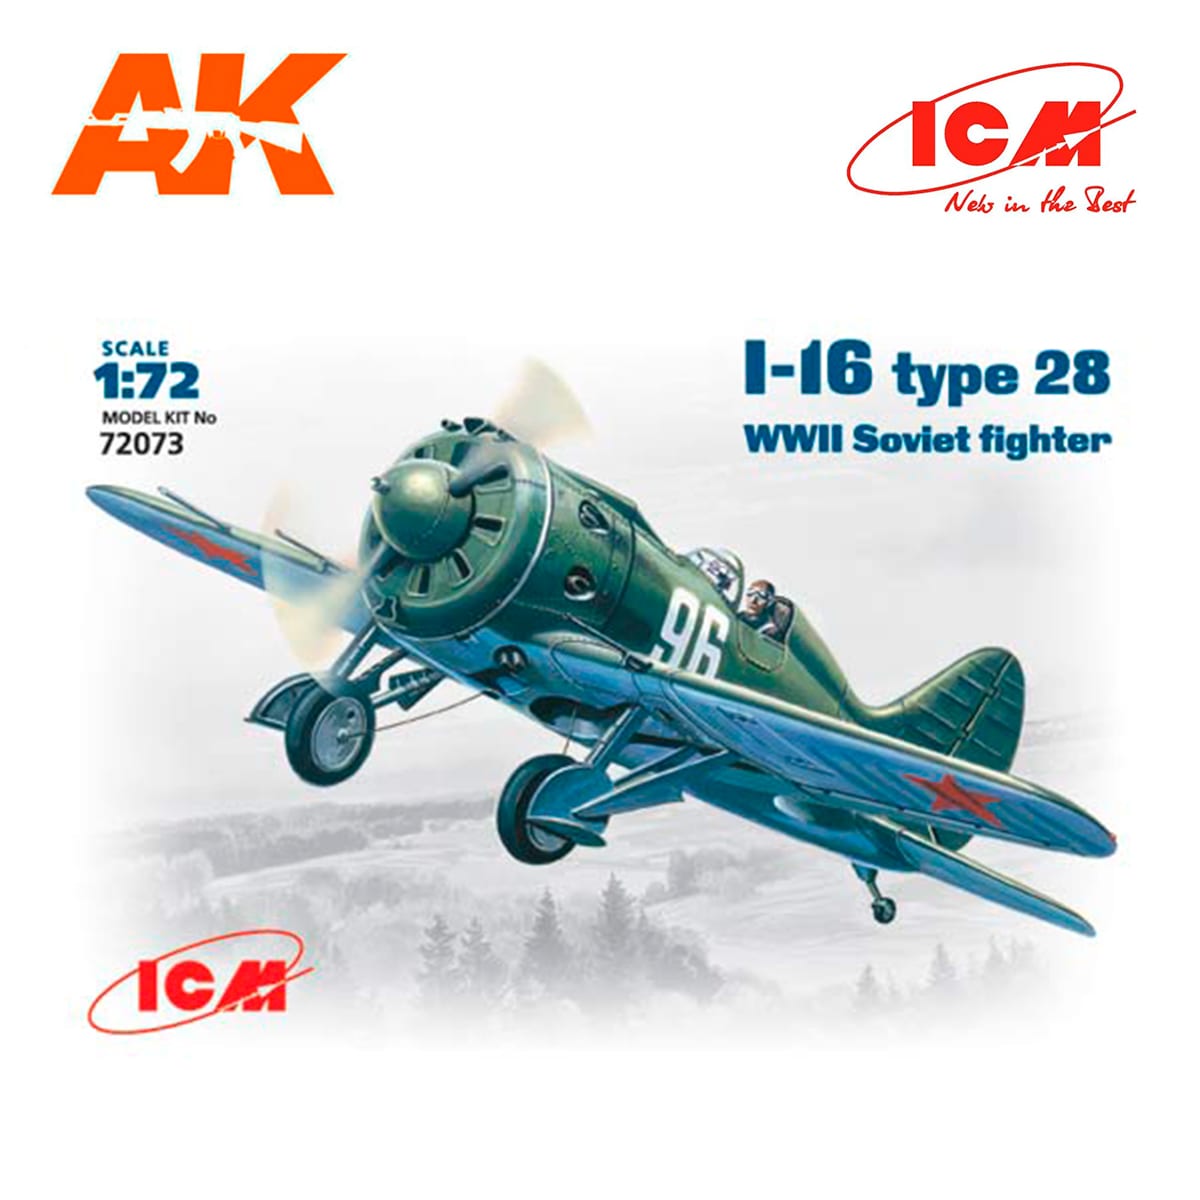 I-16 type 28, WWII Soviet Fighter 1/72